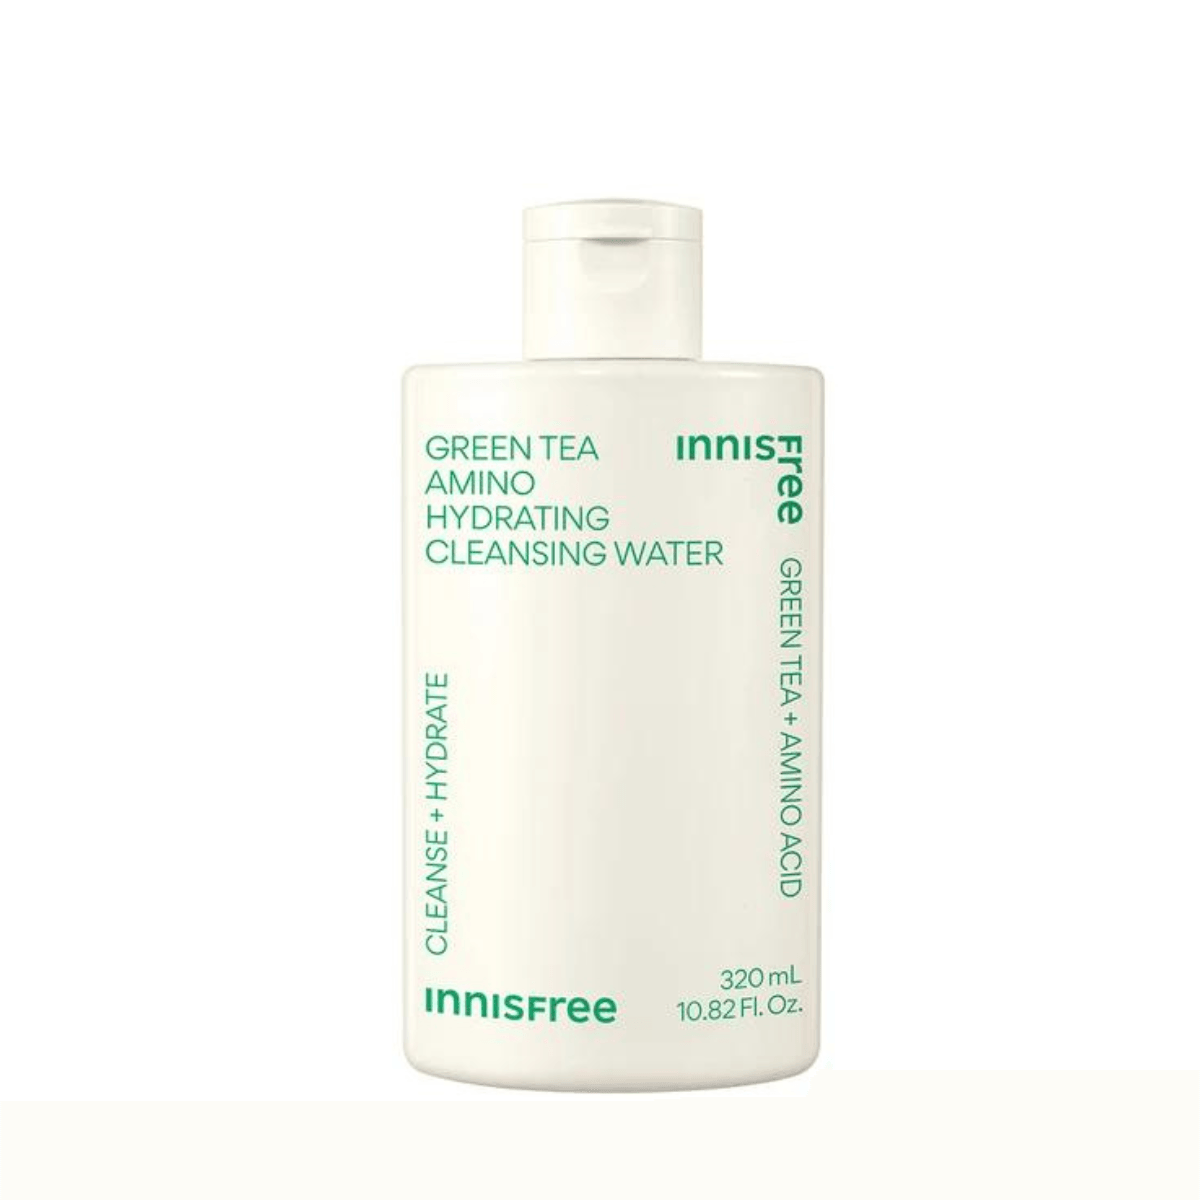 Green Tea Hydrating Amino Cleansing Water - 320 ml - K-Beauty Arabia